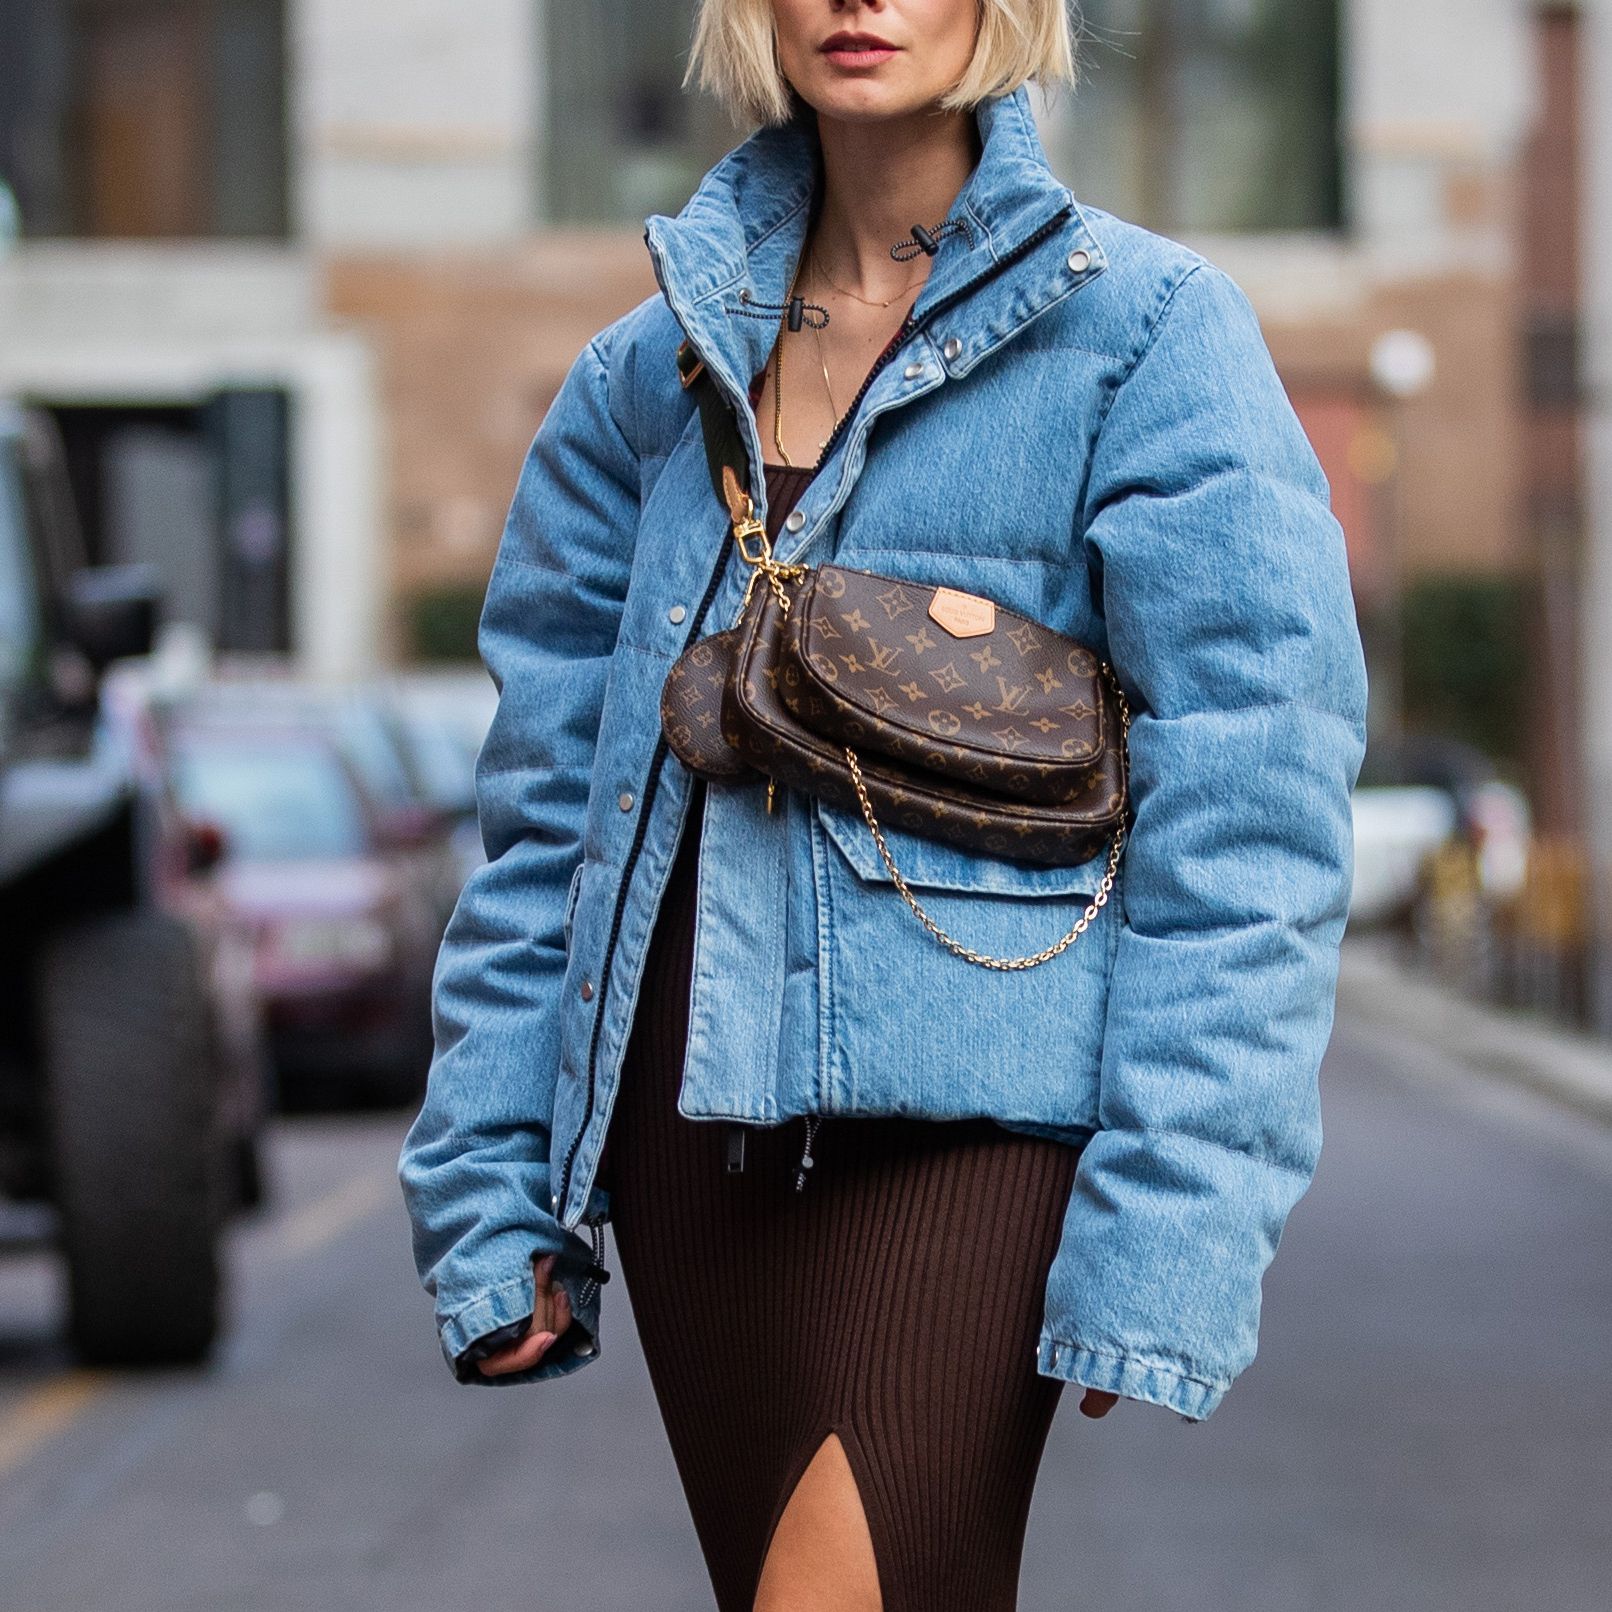 Woman in blue denim jacket standing on road during daytime photo – Free  Fashion Image on Unsplash